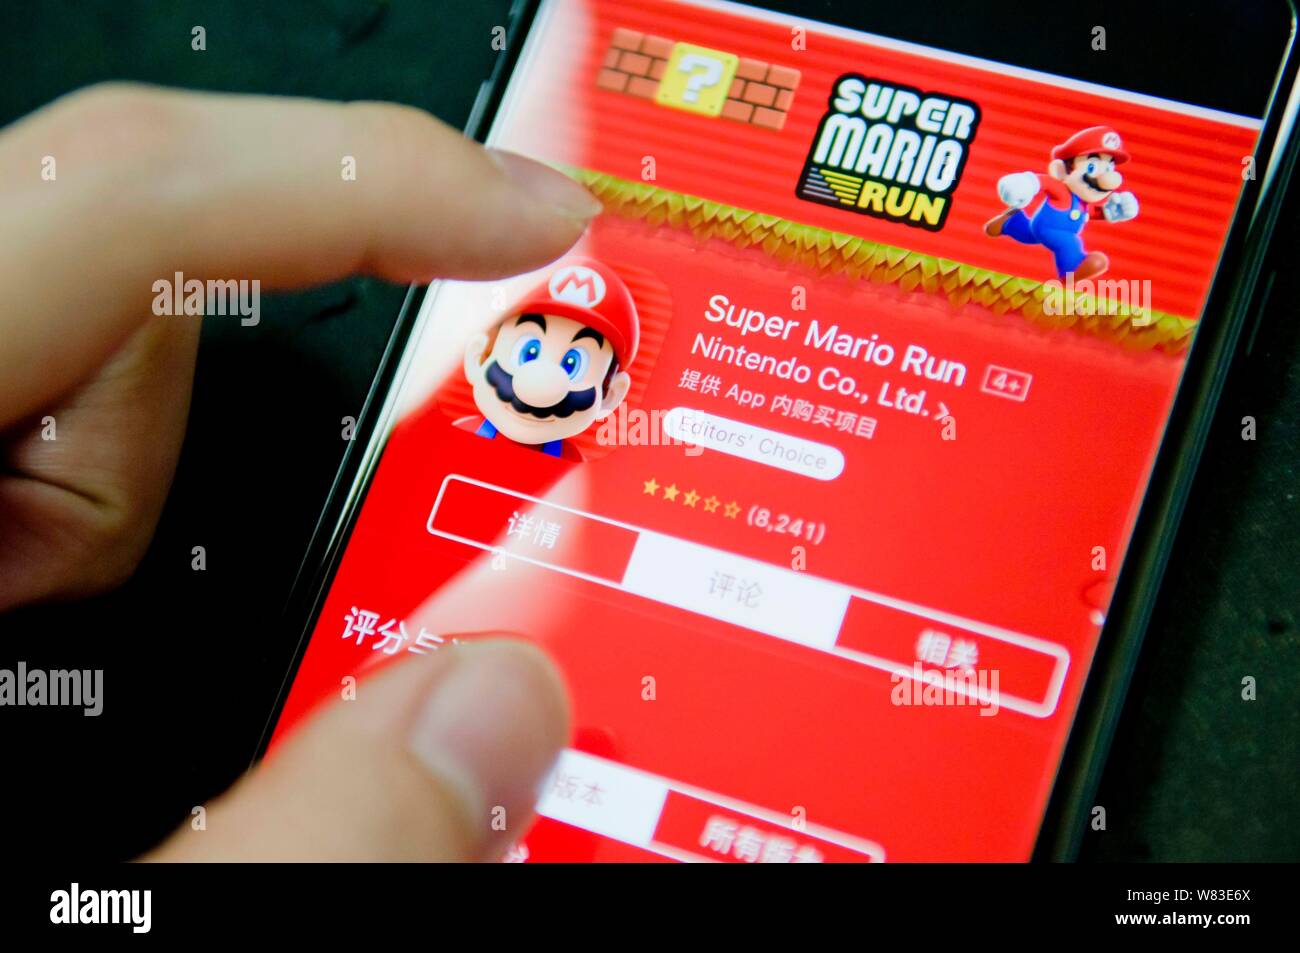 Super Mario Run on the App Store